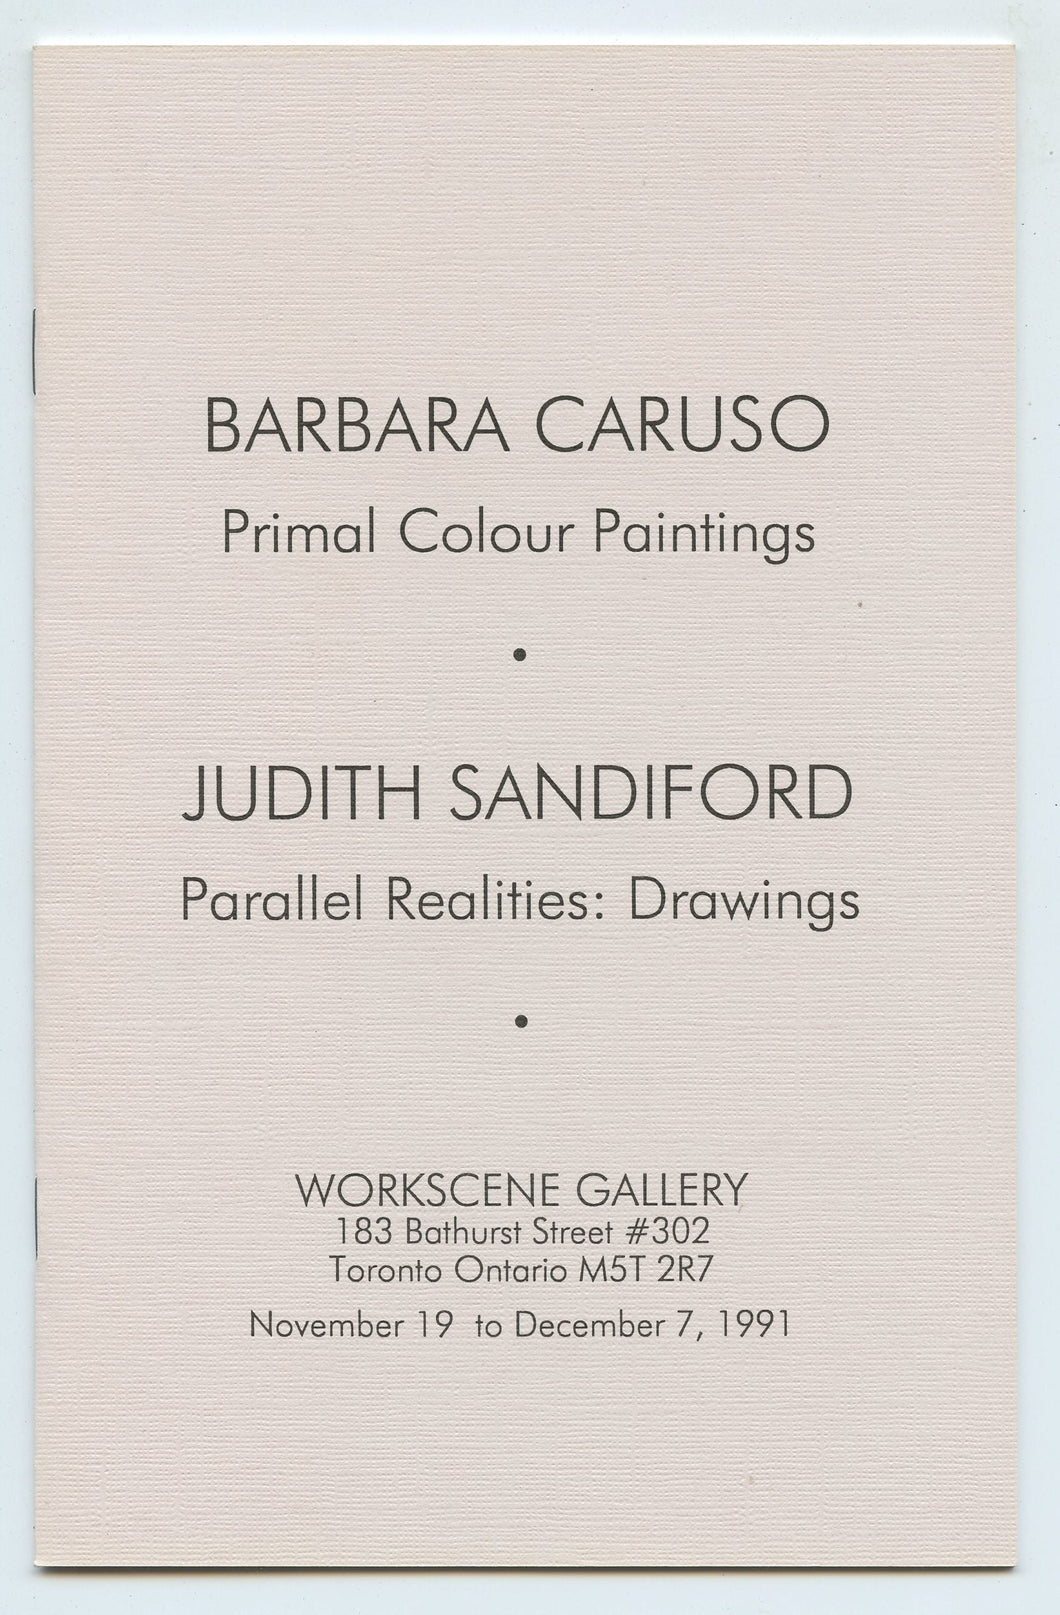 Barbara Caruso: Primal Colour Paintings